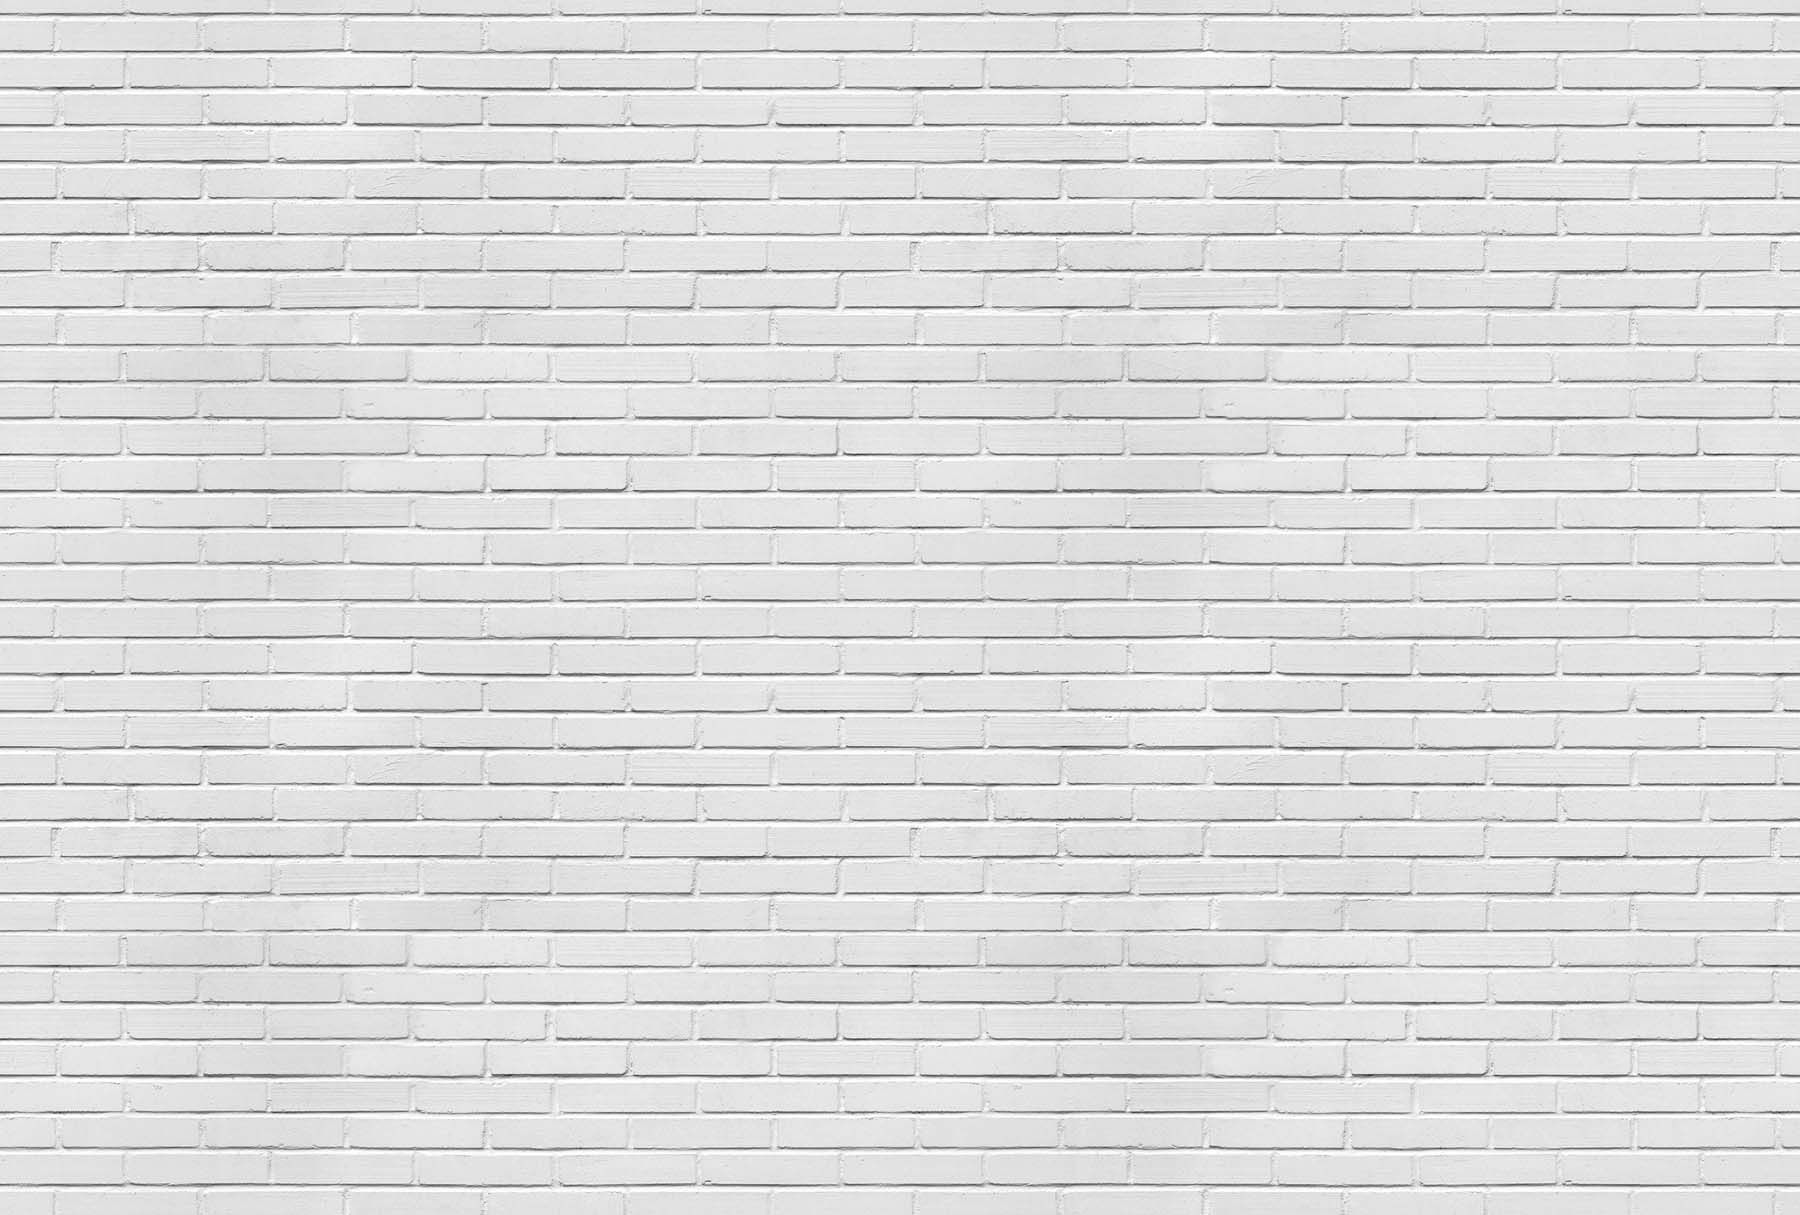 Imitation brick wallpaper